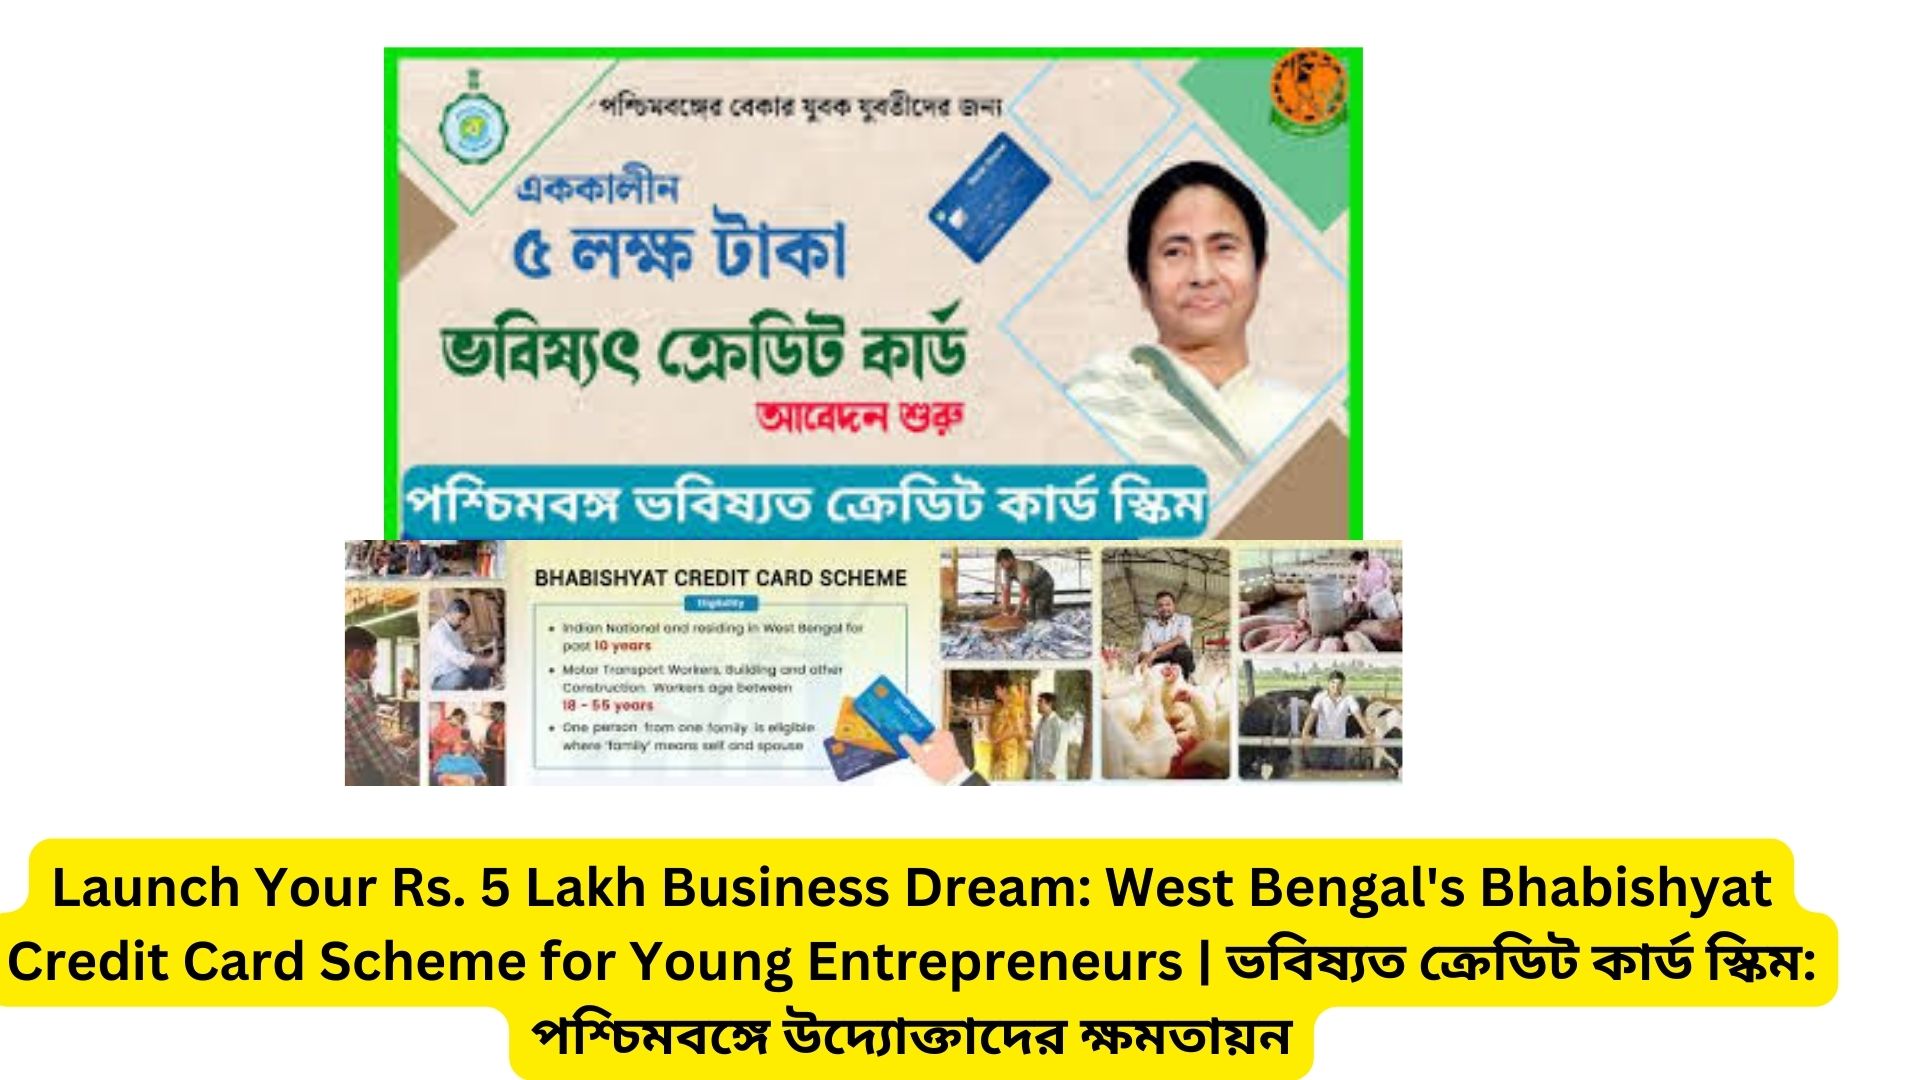 Launch Your Rs. 5 Lakh Business Dream: West Bengal's Bhabishyat Credit Card Scheme for Young Entrepreneurs | ভবিষ্যত ক্রেডিট কার্ড স্কিম: পশ্চিমবঙ্গে উদ্যোক্তাদের ক্ষমতায়ন